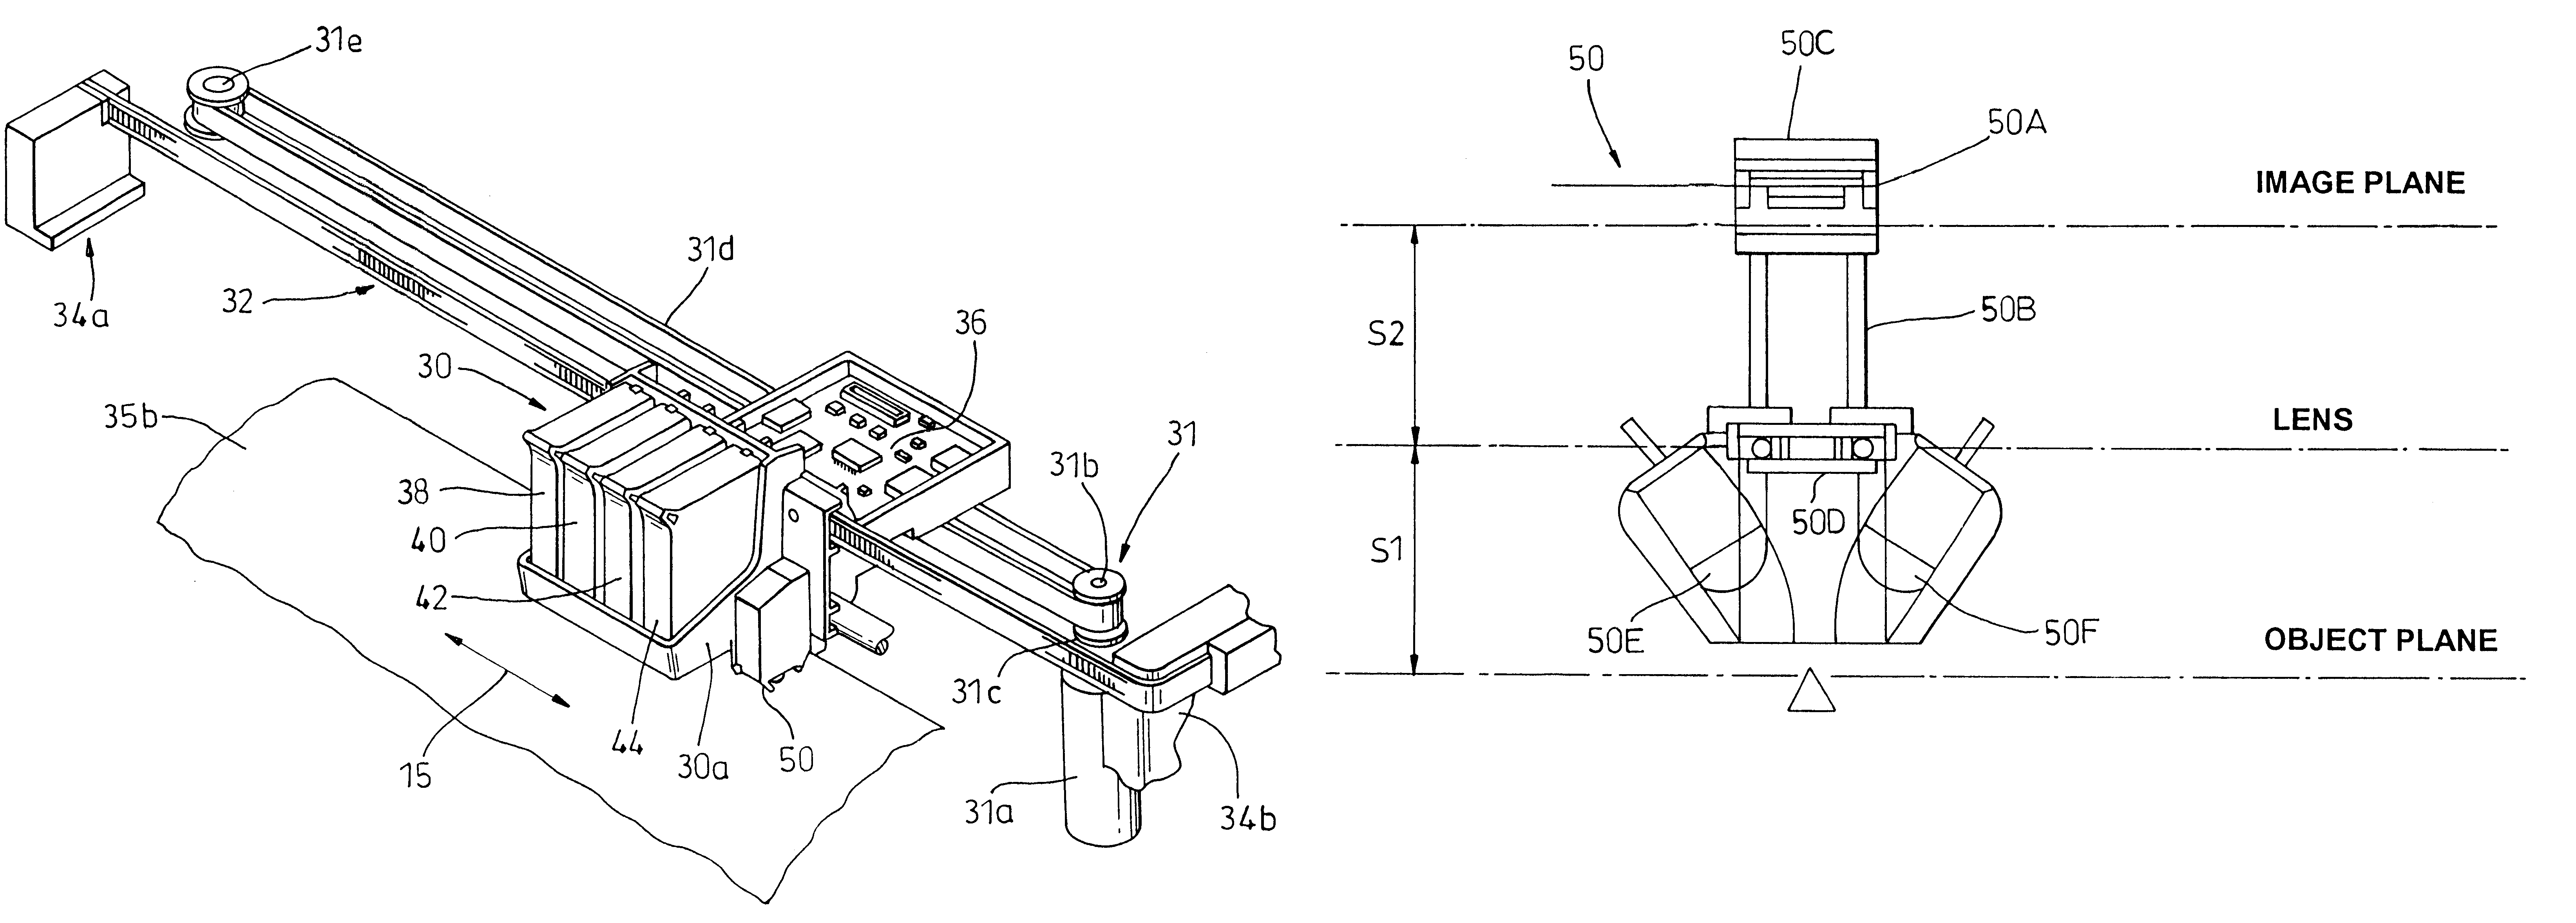 Printer device alignment method and apparatus